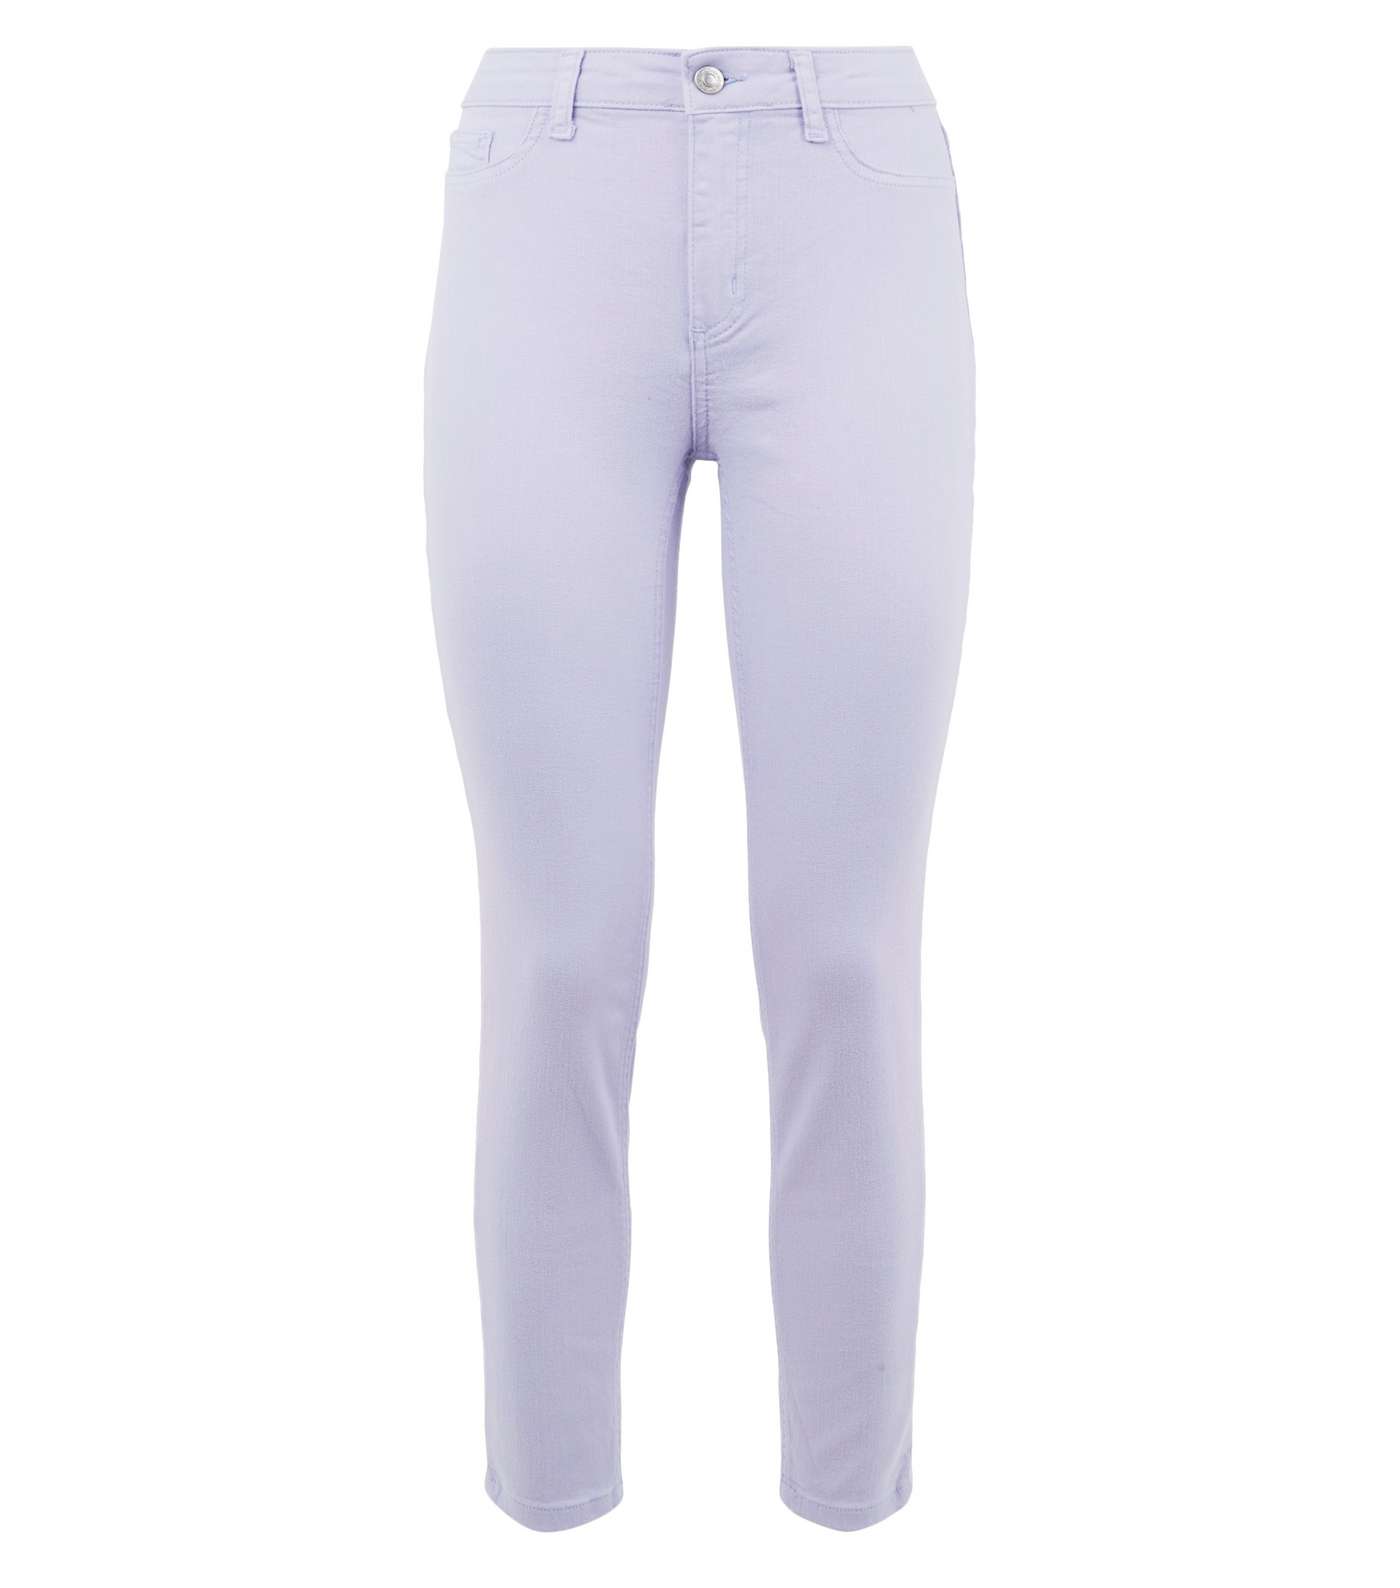 Lilac Ankle Grazer Skinny Jenna Jeans Image 4